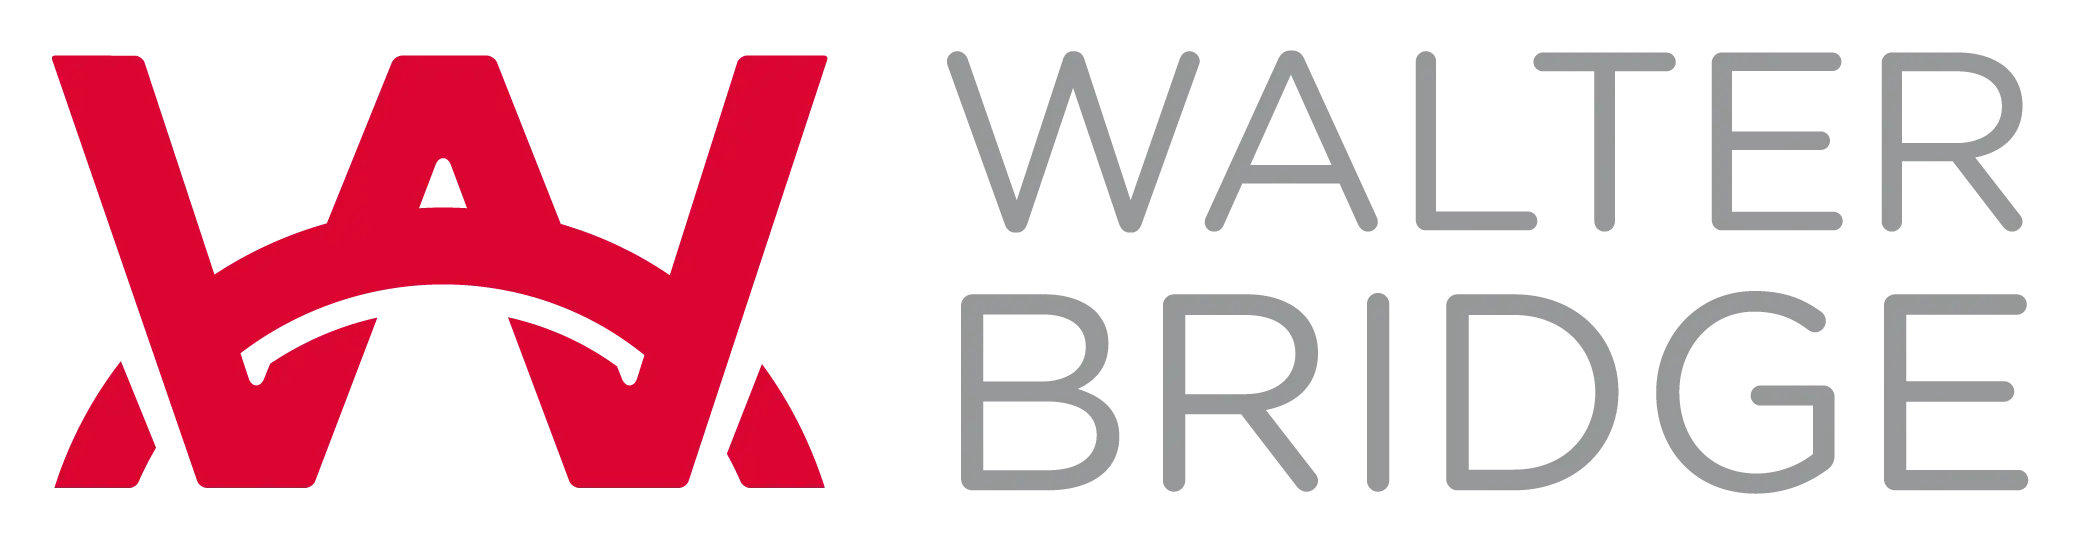 Walter Bridge logo